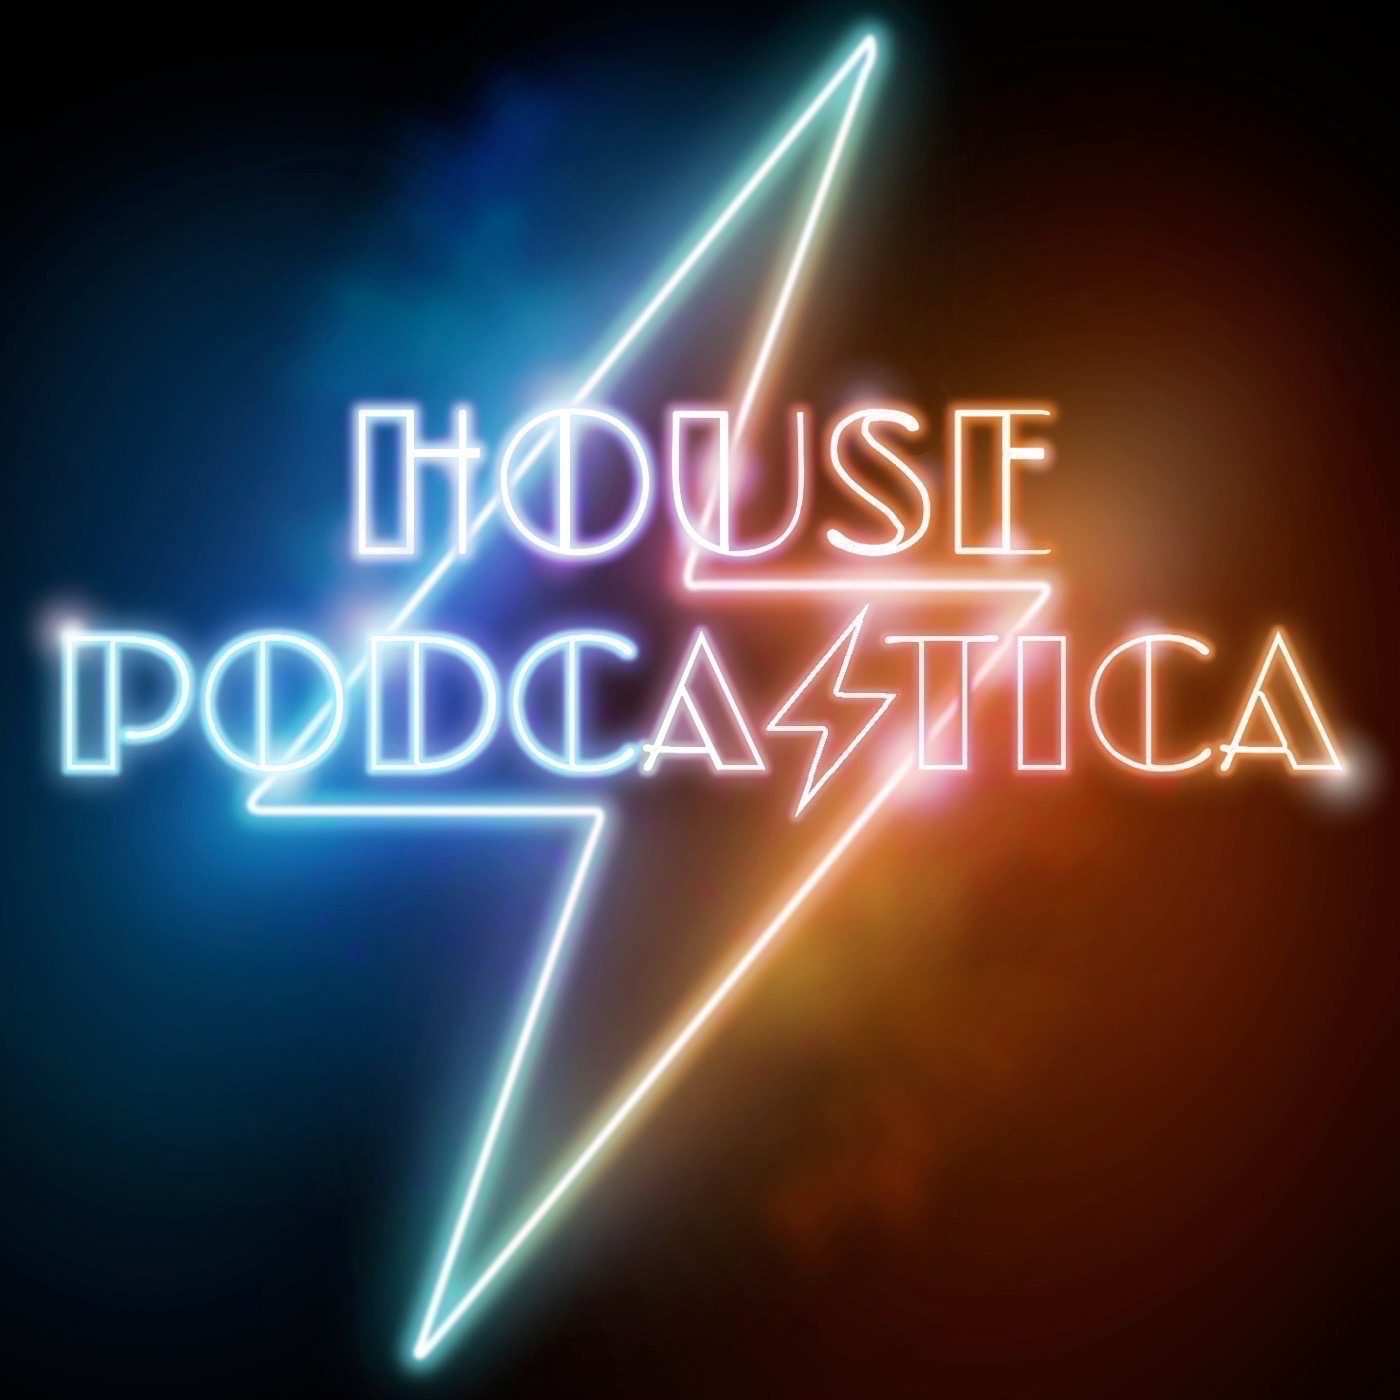 House Podcastica: House of the Dragon, Handmaid's Tale, Rings of Power, She-Hulk, Cobra Kai